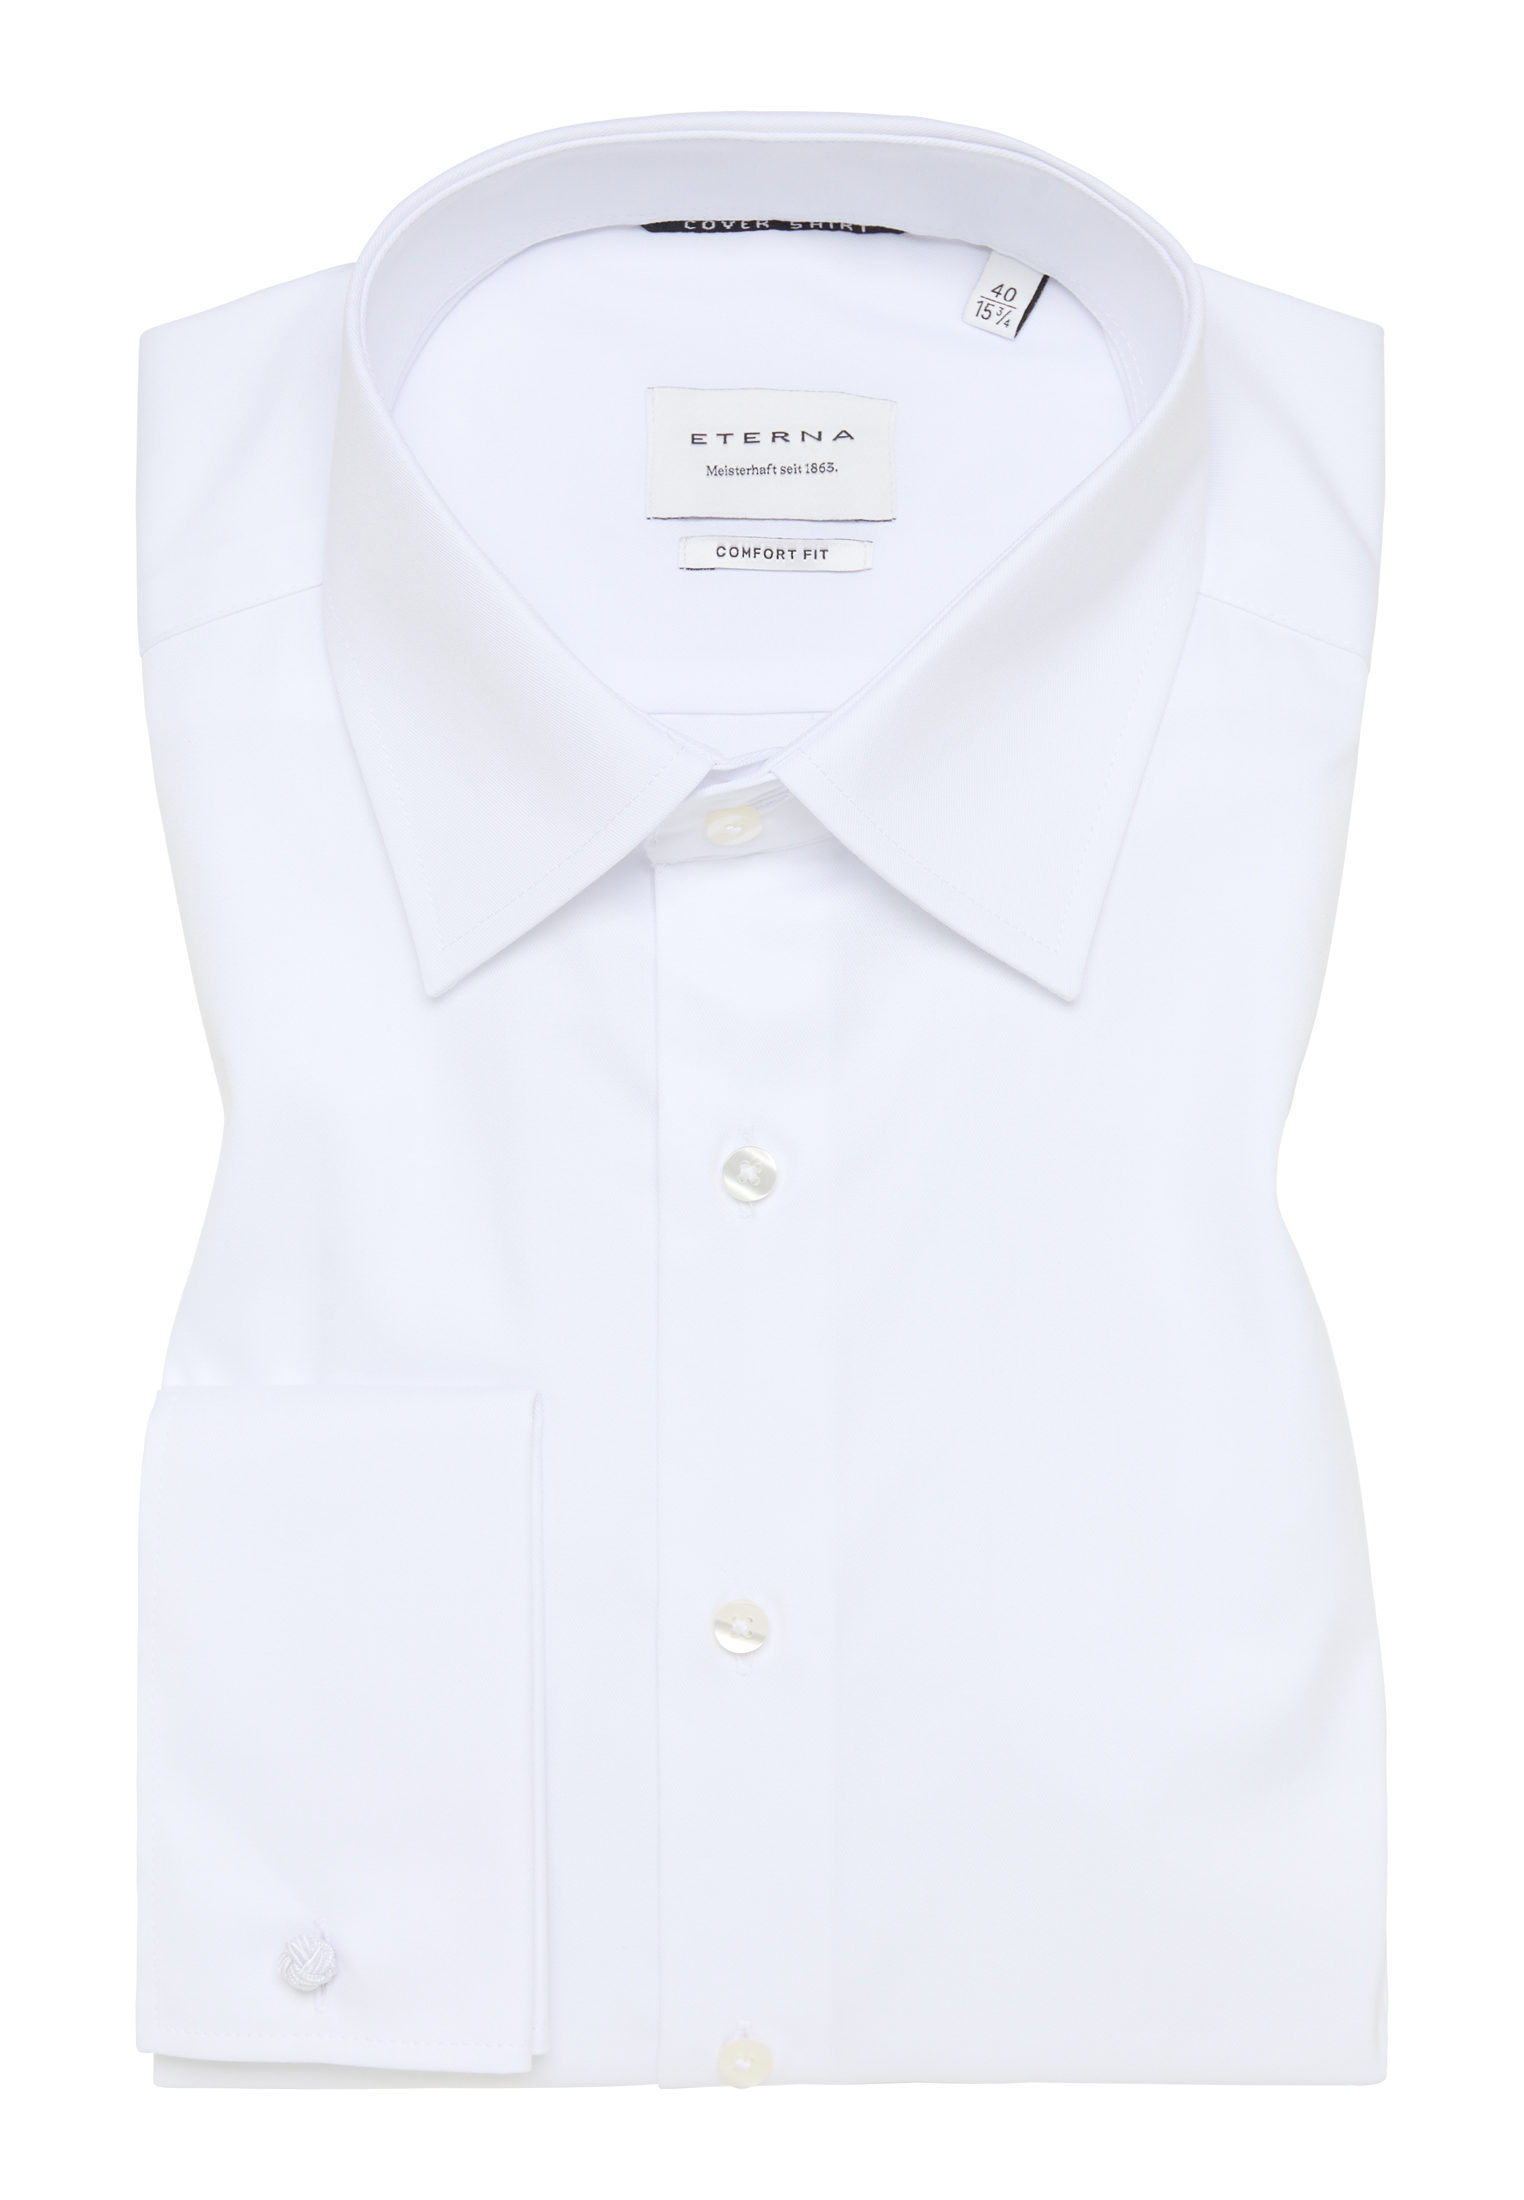 COMFORT | Langarm weiß | | unifarben | Shirt Cover 1SH05509-00-01-41-1/1 41 weiß FIT in